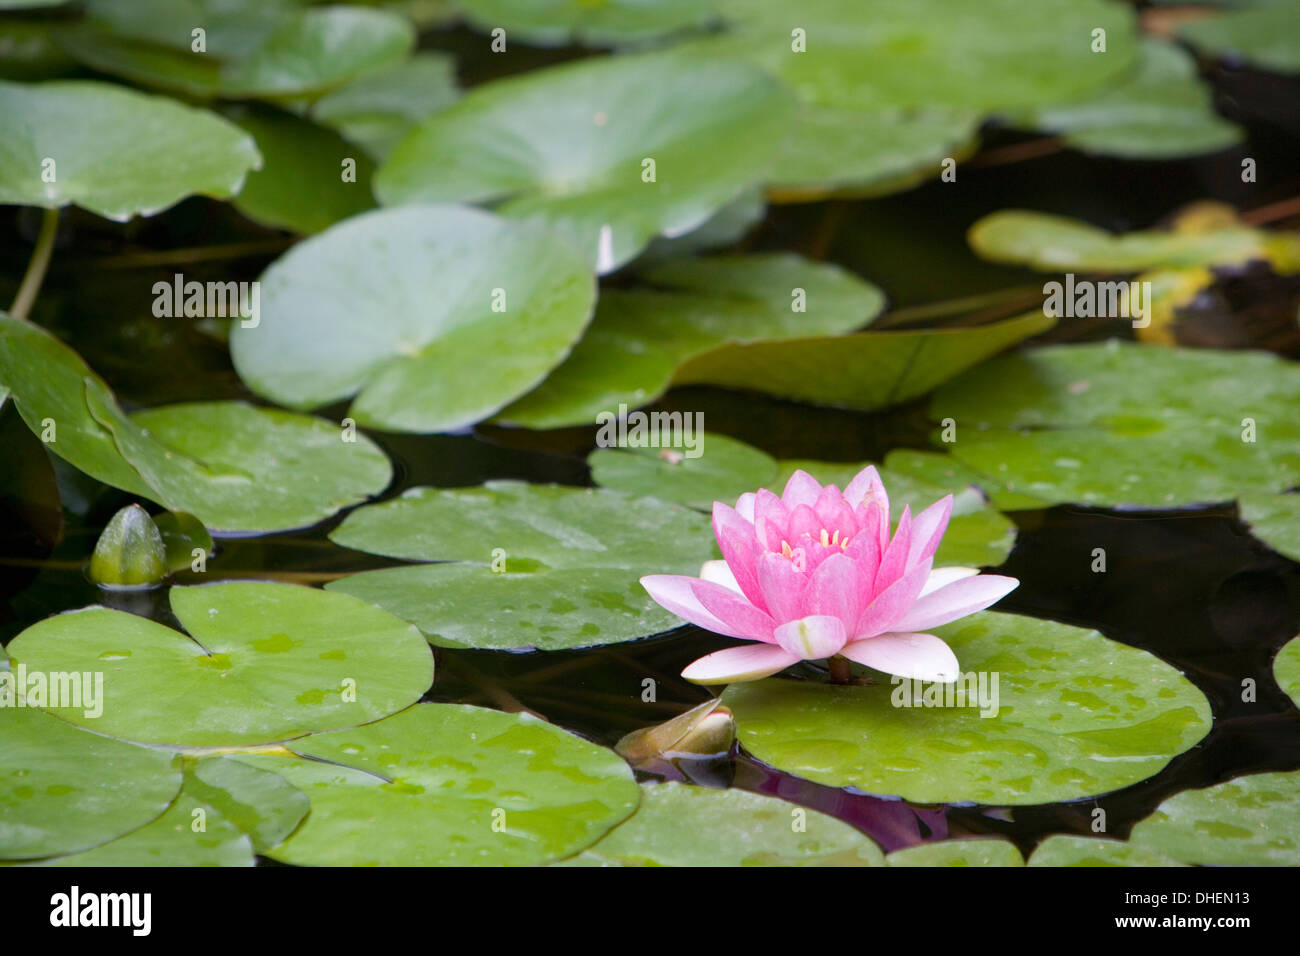 Rosa Seerose im Teich, Jardin Botanico (Botanischer Garten), Valencia, Costa del Azahar, Spanien, Europa Stockfoto